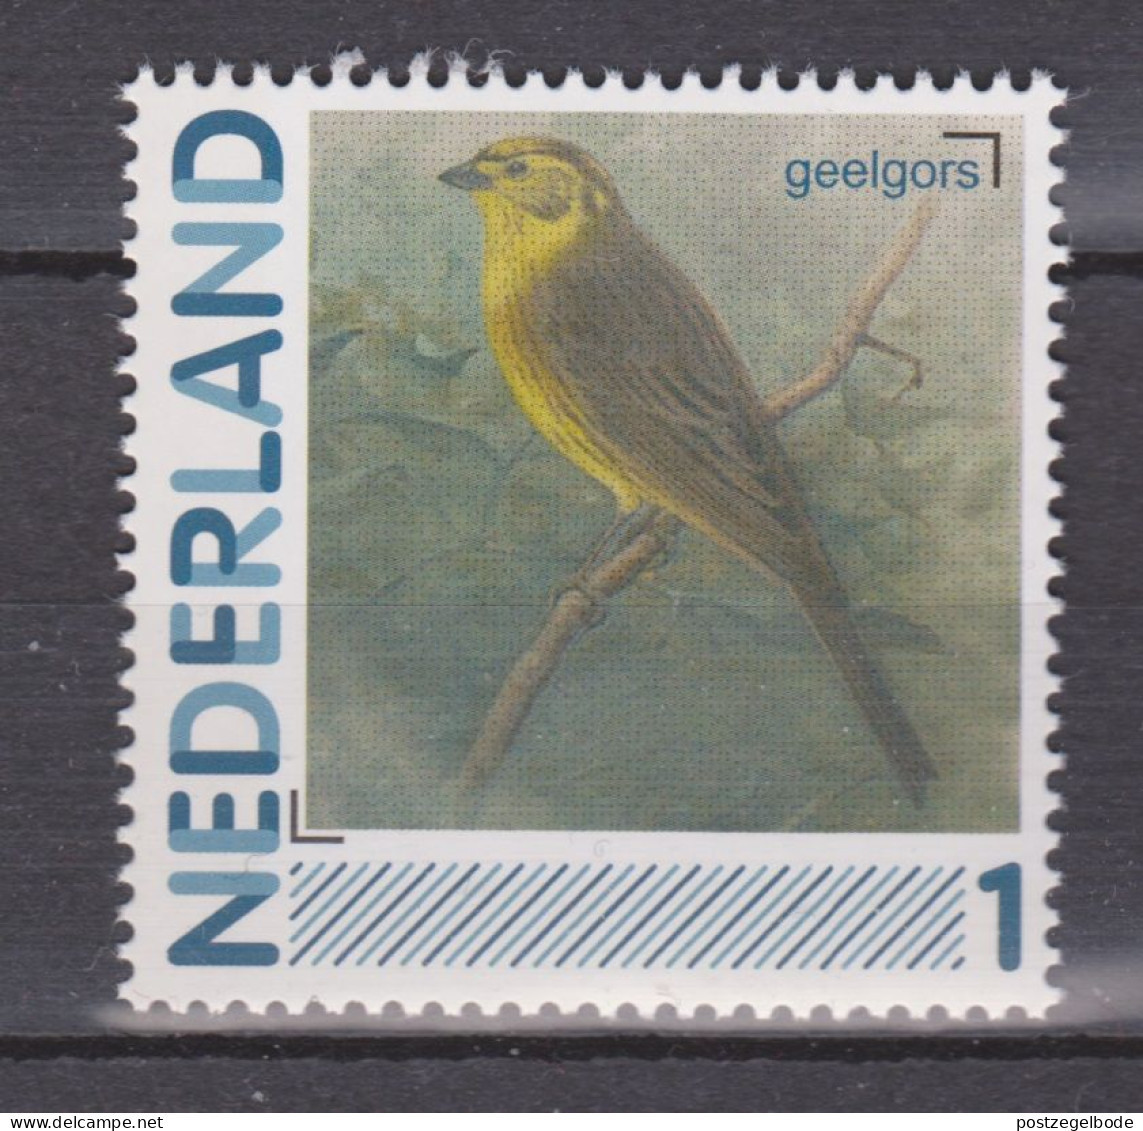 Nederland Netherlands Pays Bas Holanda MNH Geelgors Yellowhammer Bruant Jaune Escribano Cerillo Vogel Bird Ave Oiseau - Sparrows